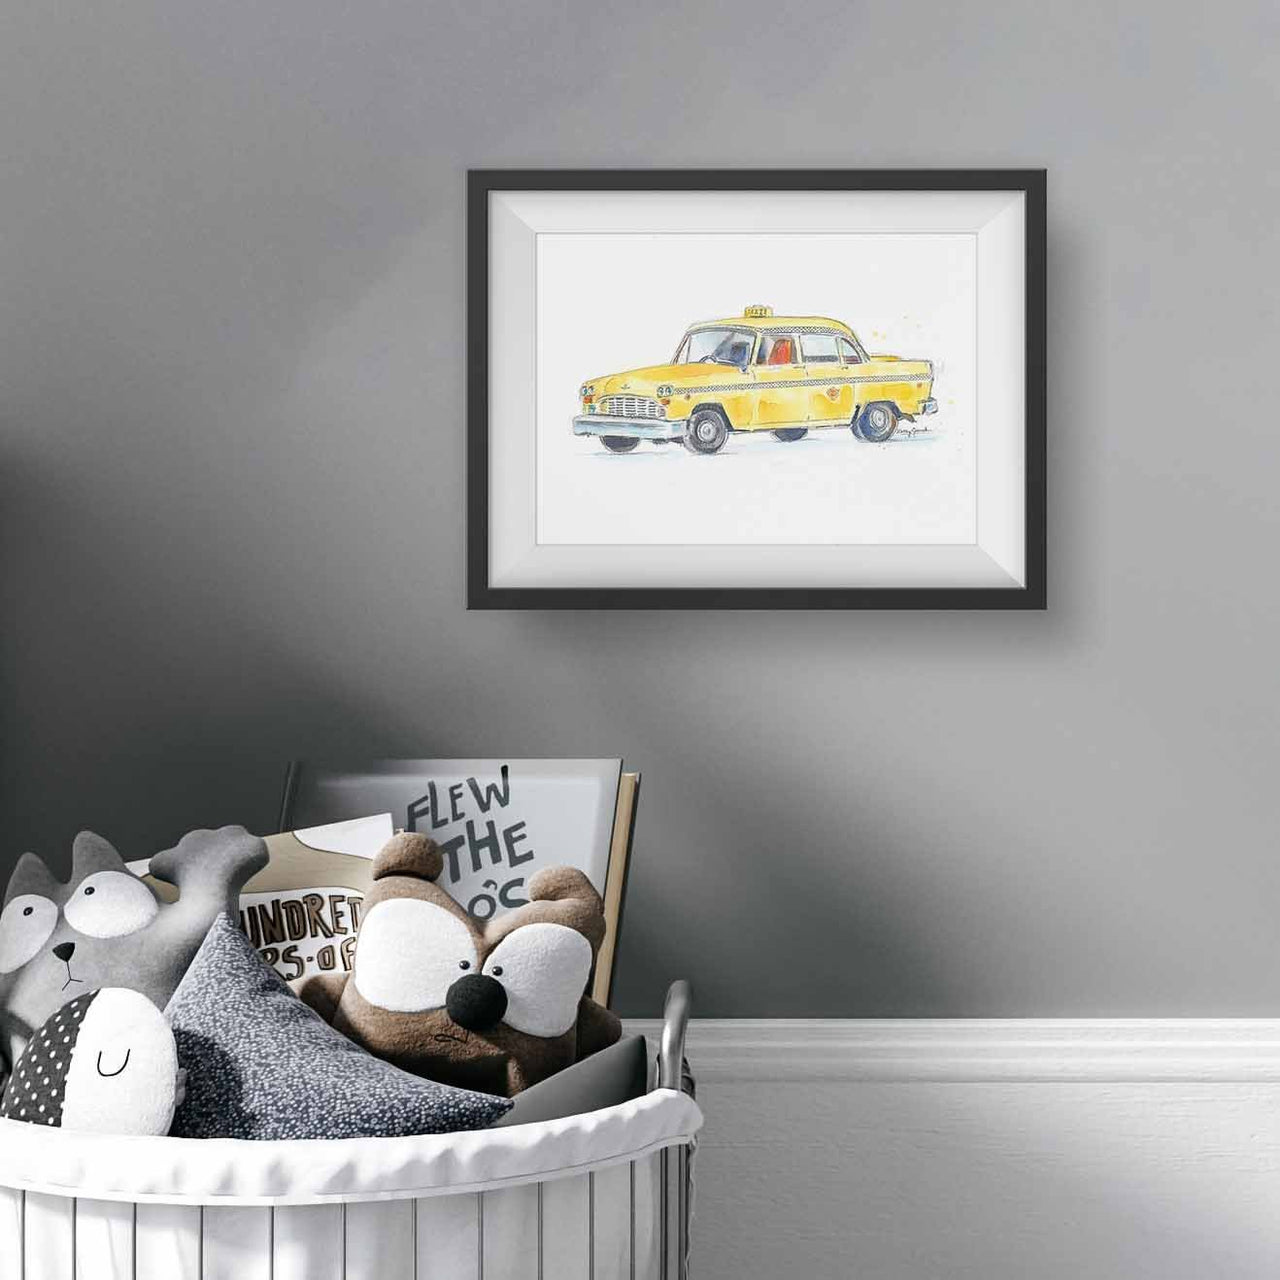 black framed vintage yellow tax cab art print in kids bedroom